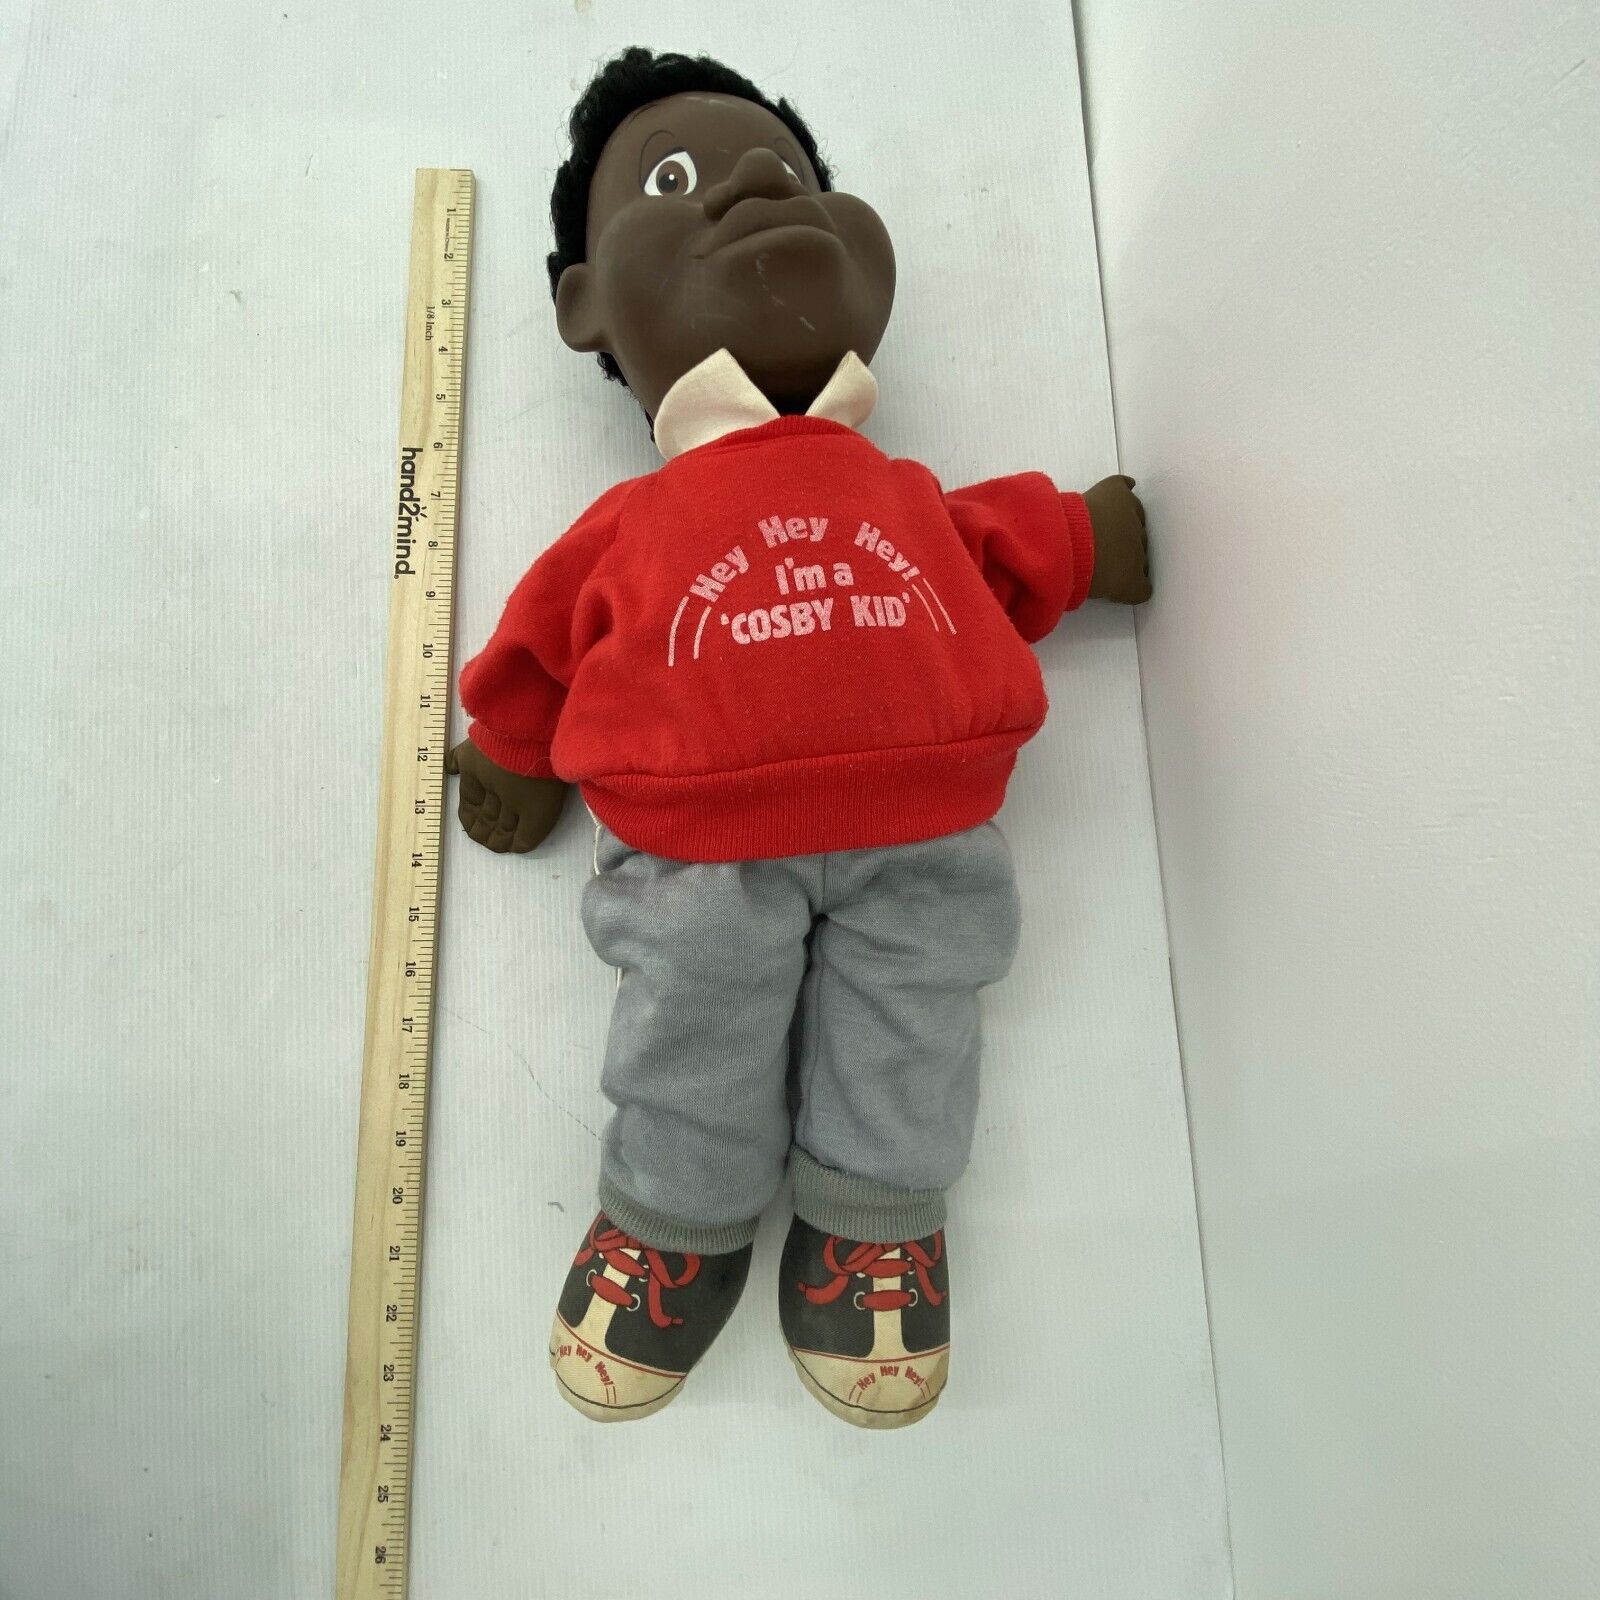 VTG 1970s Remco Bill Cosby Kids Fat Albert Plush Doll Rubber Headed Used